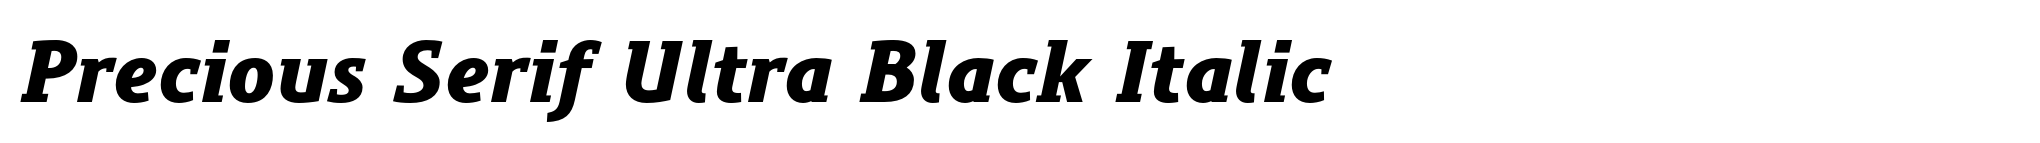 Precious Serif Ultra Black Italic image